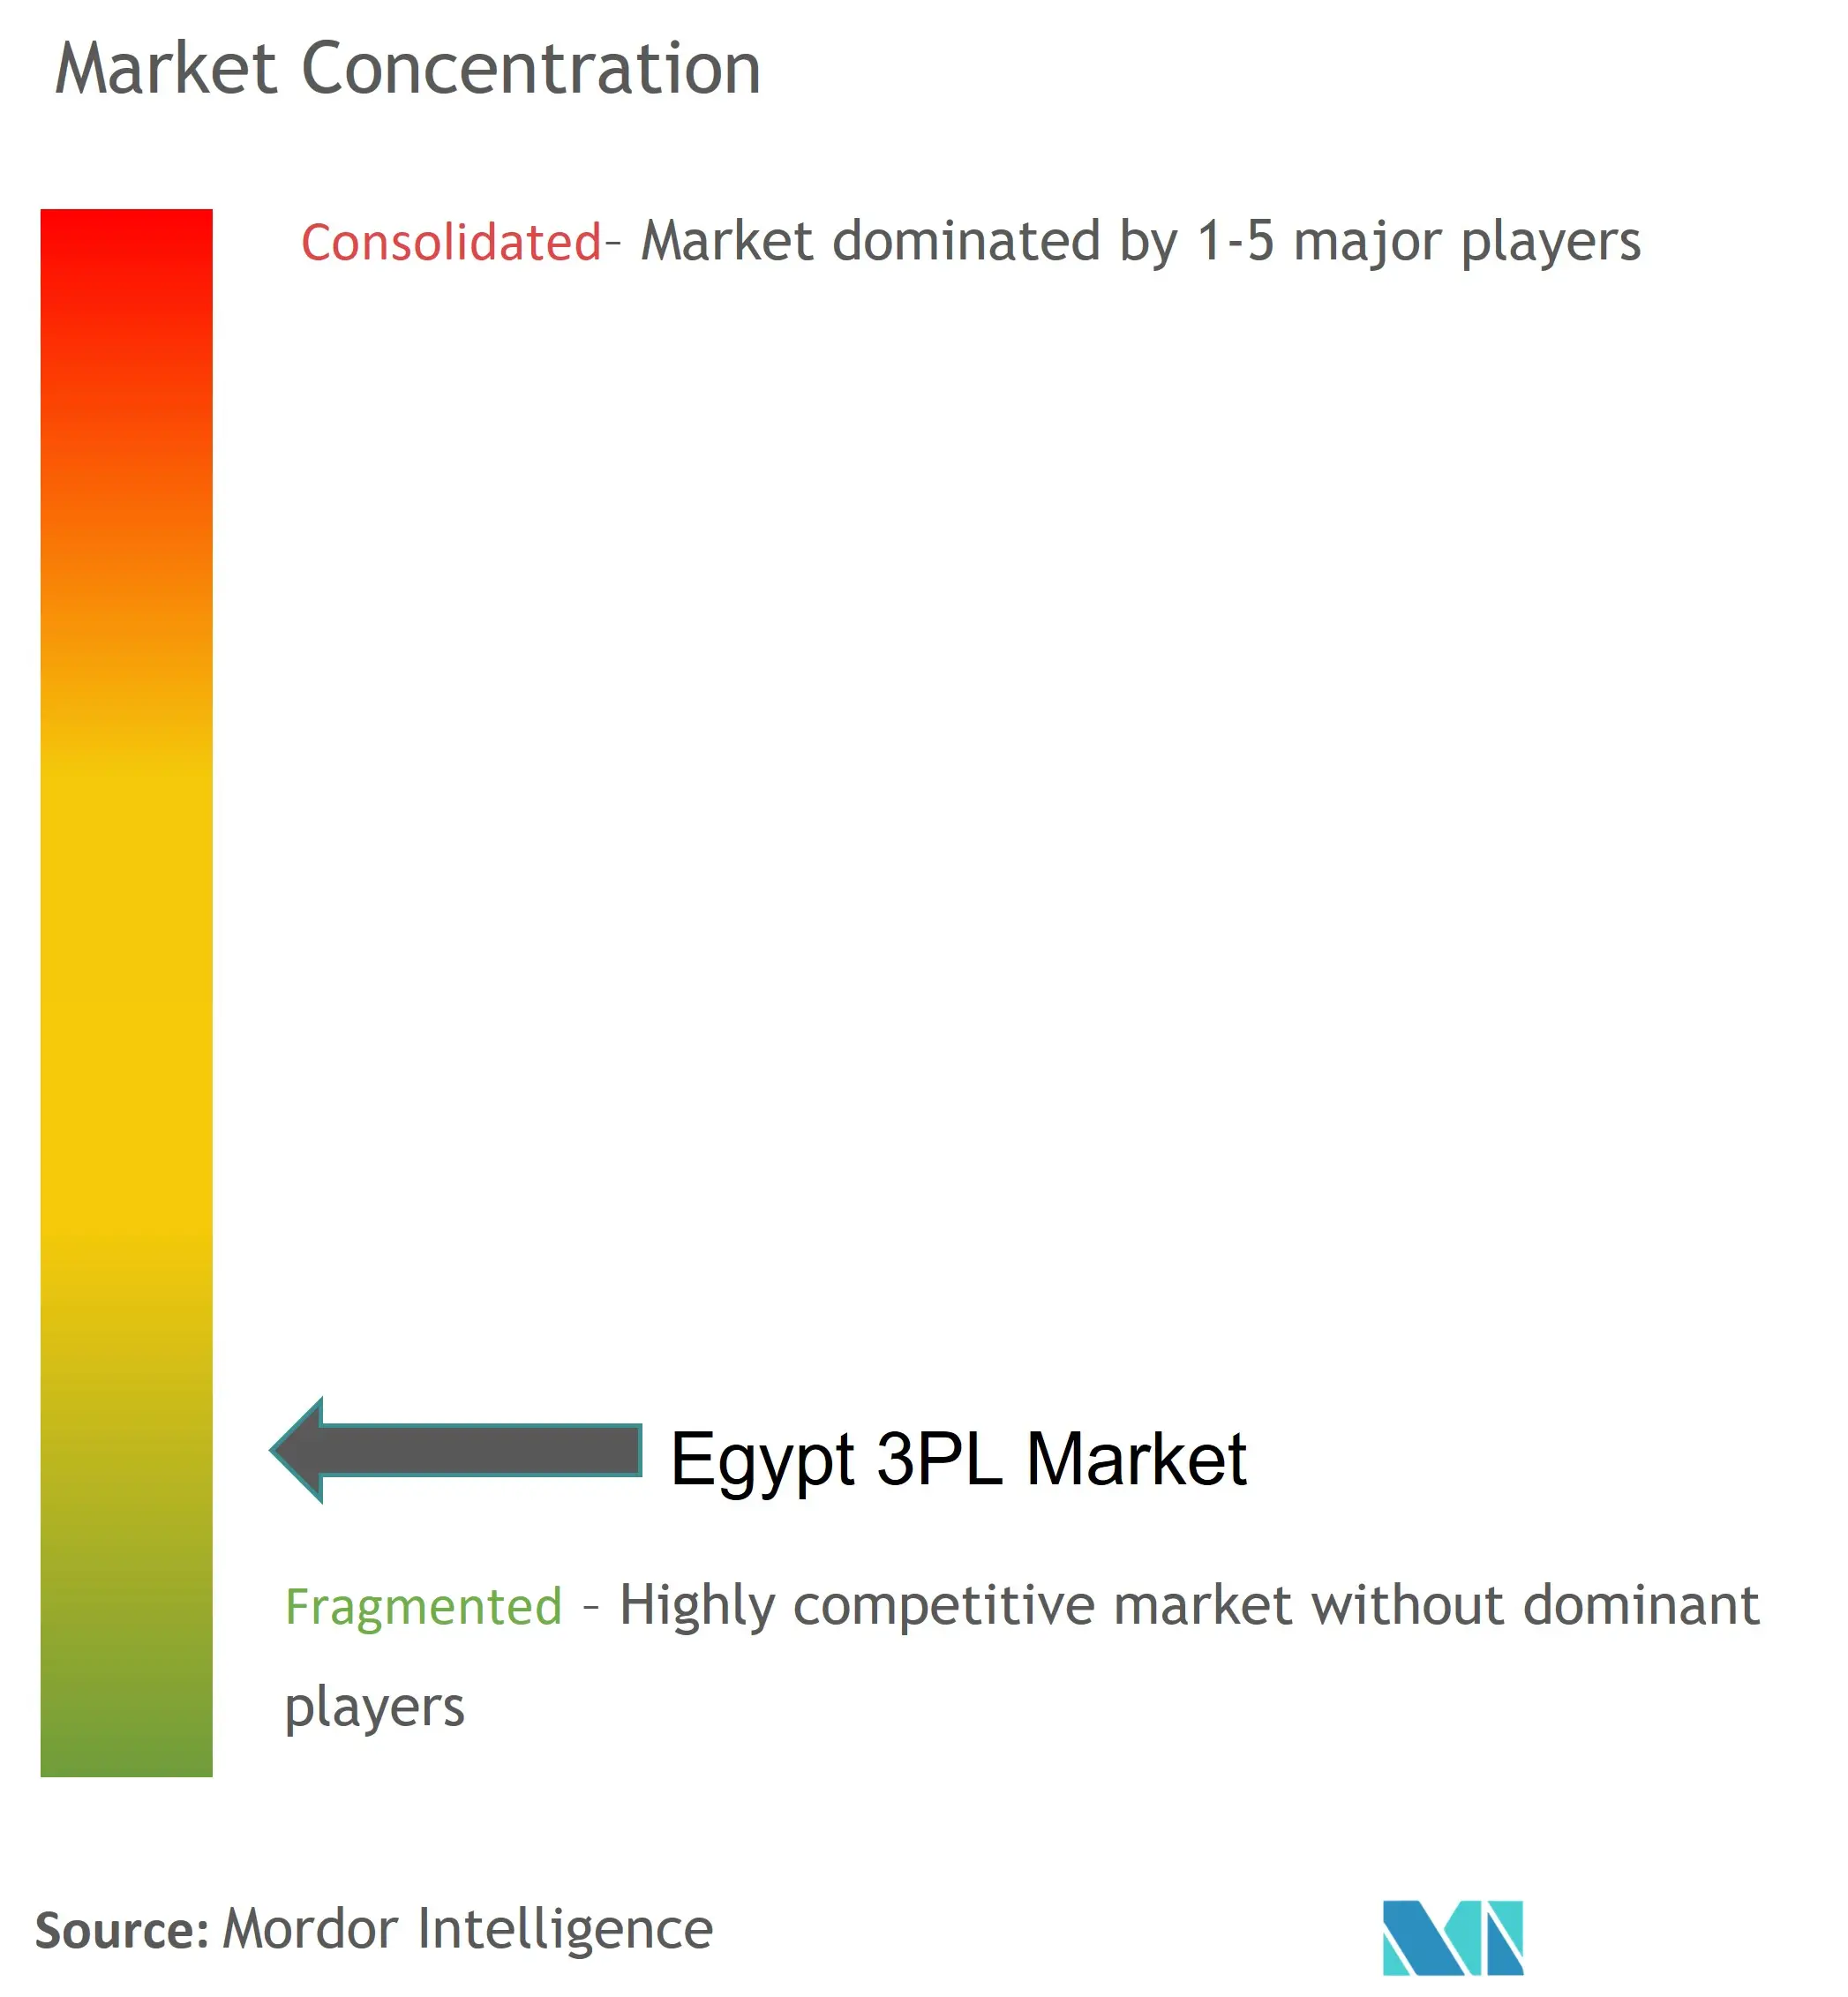 Egypt 3PL Market Concentration